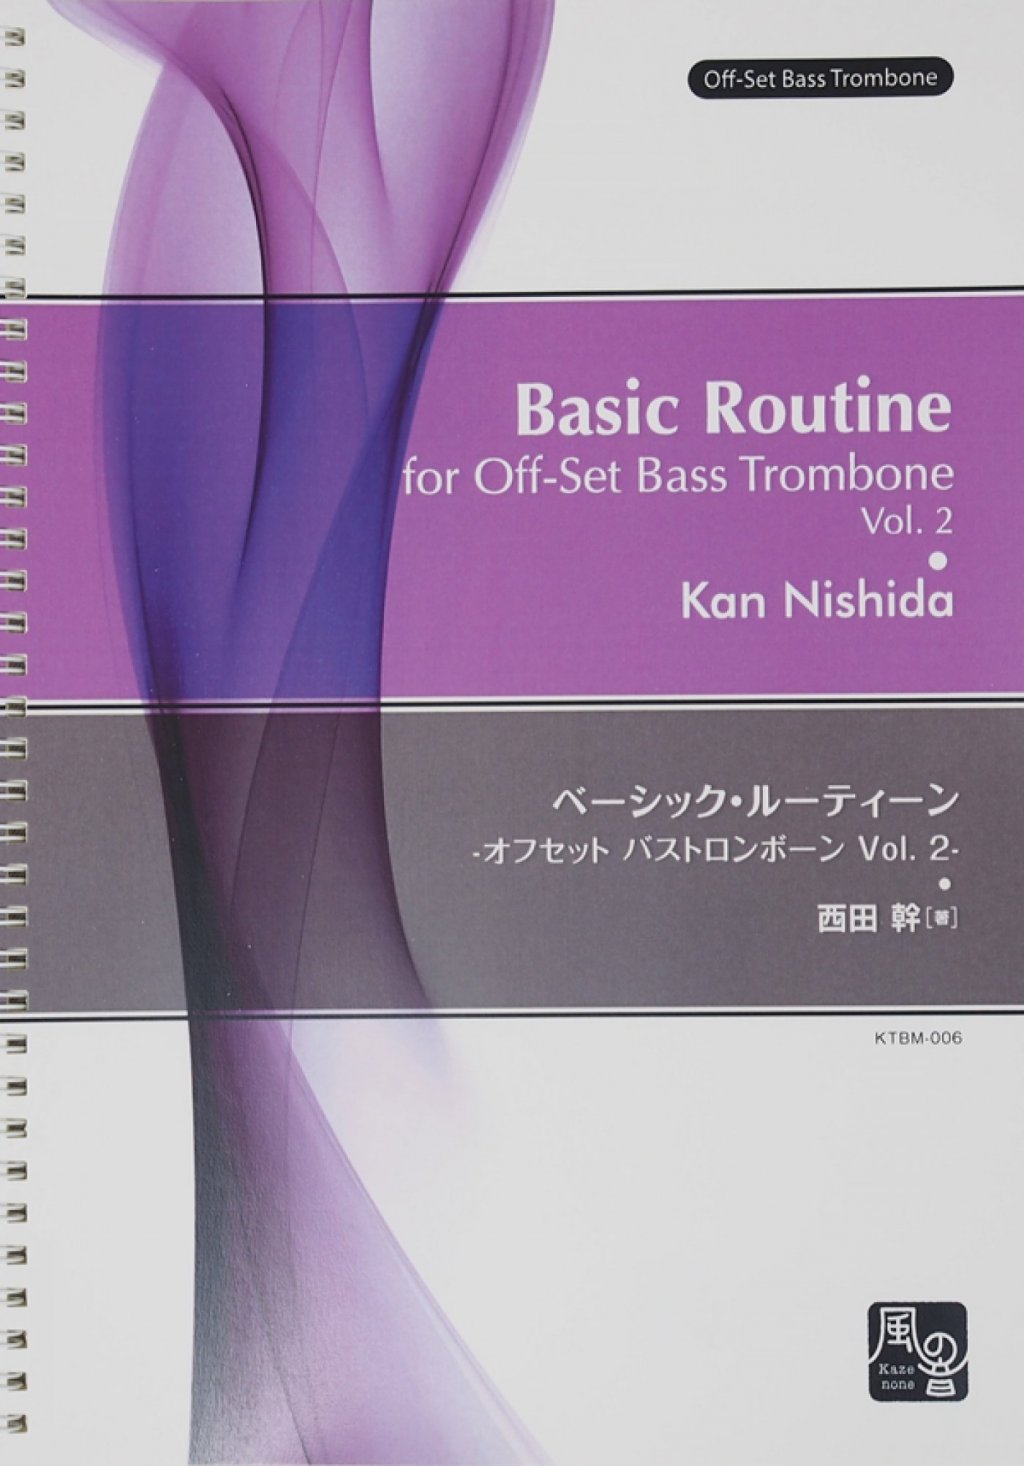 「Basic Routine for Off-Set Bass Trombone Vol.2 ベーシック・ルーティーン Vol.2《オフセット バストロンボーン》」 画像 1